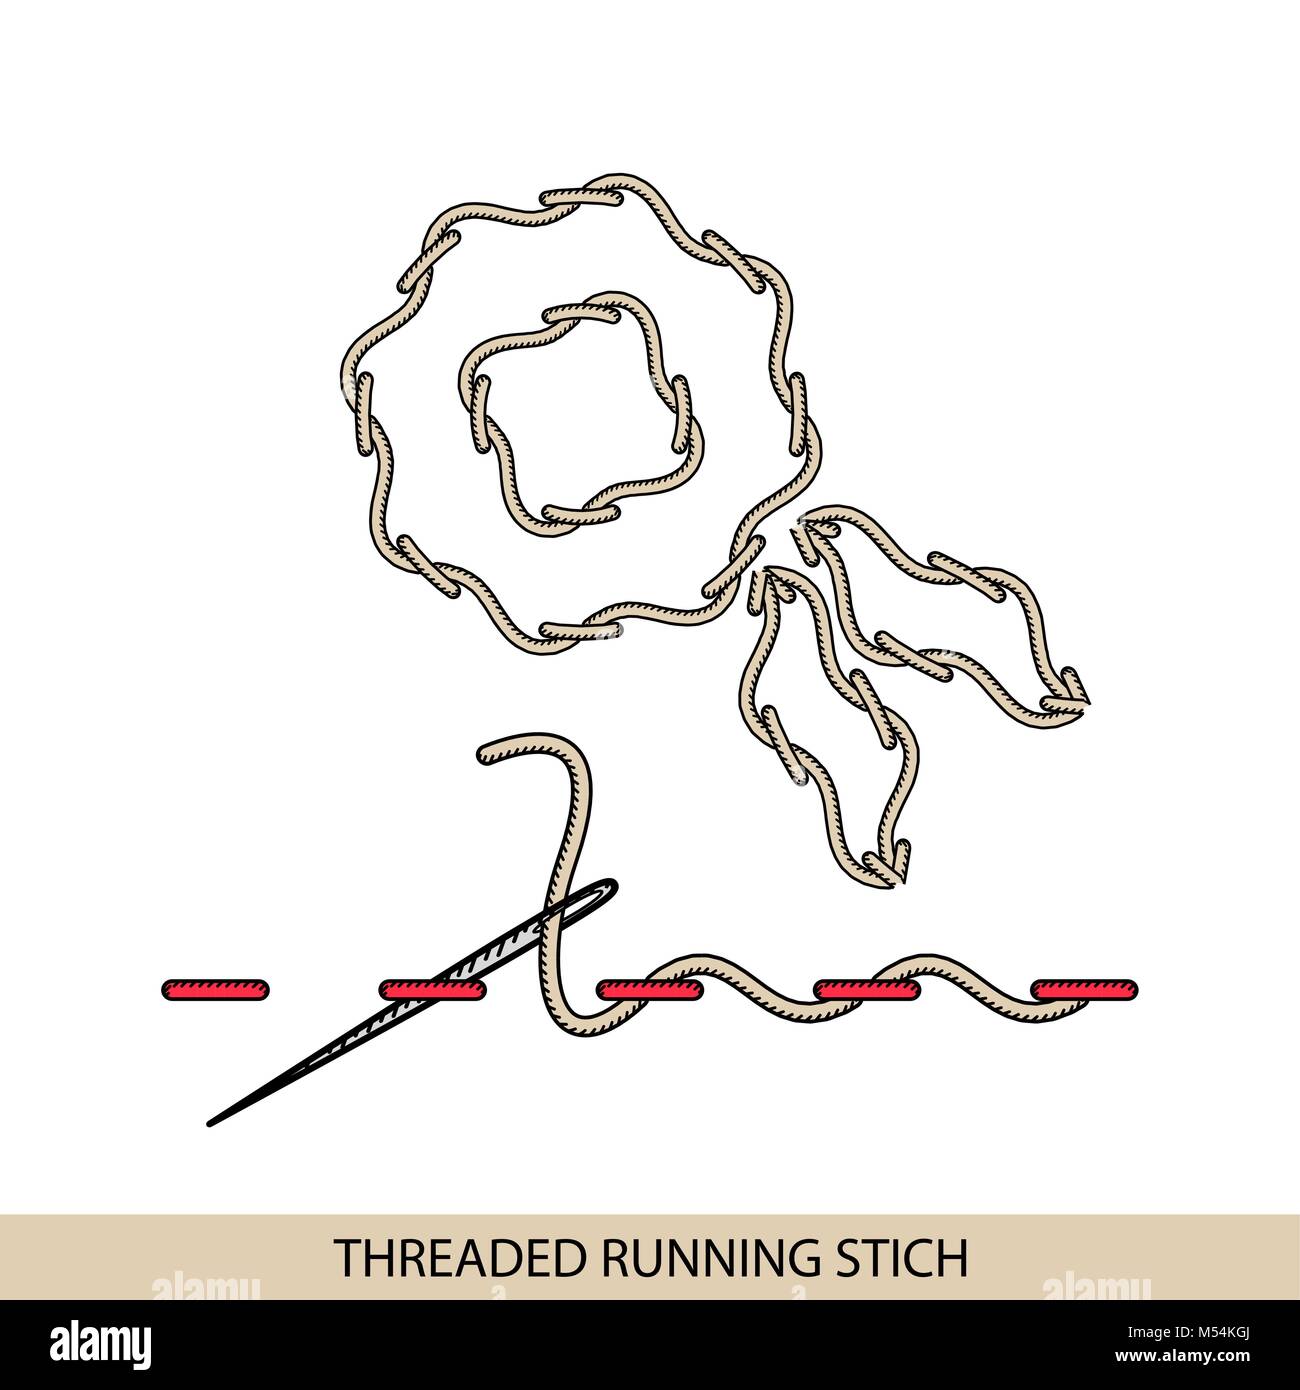 Threaded Running Stitch